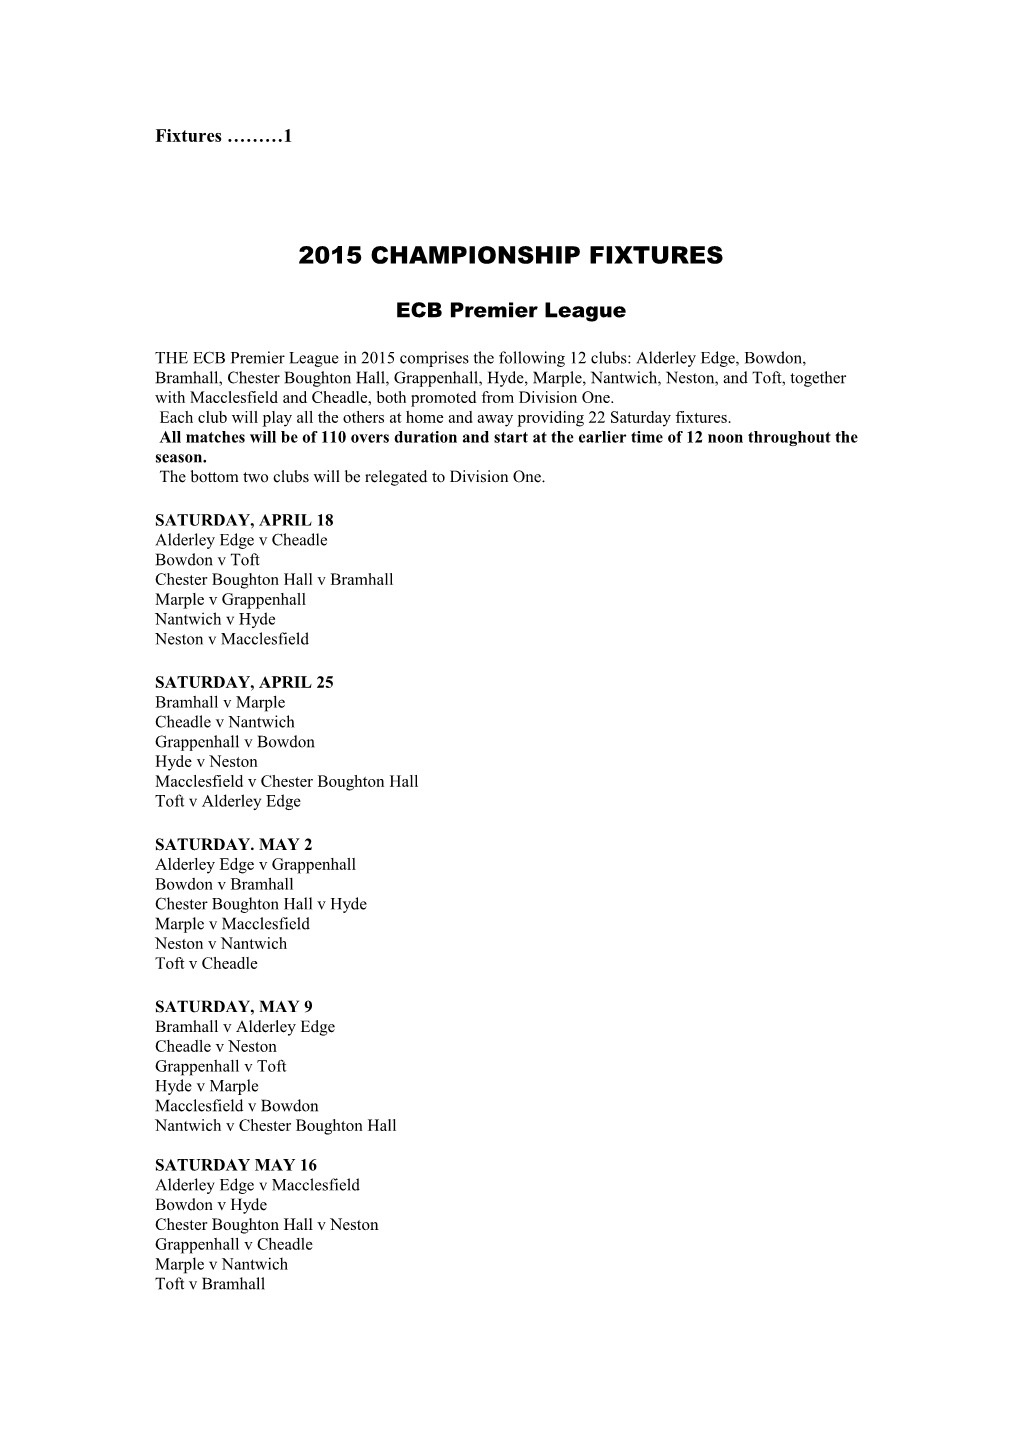 2015 Championship Fixtures